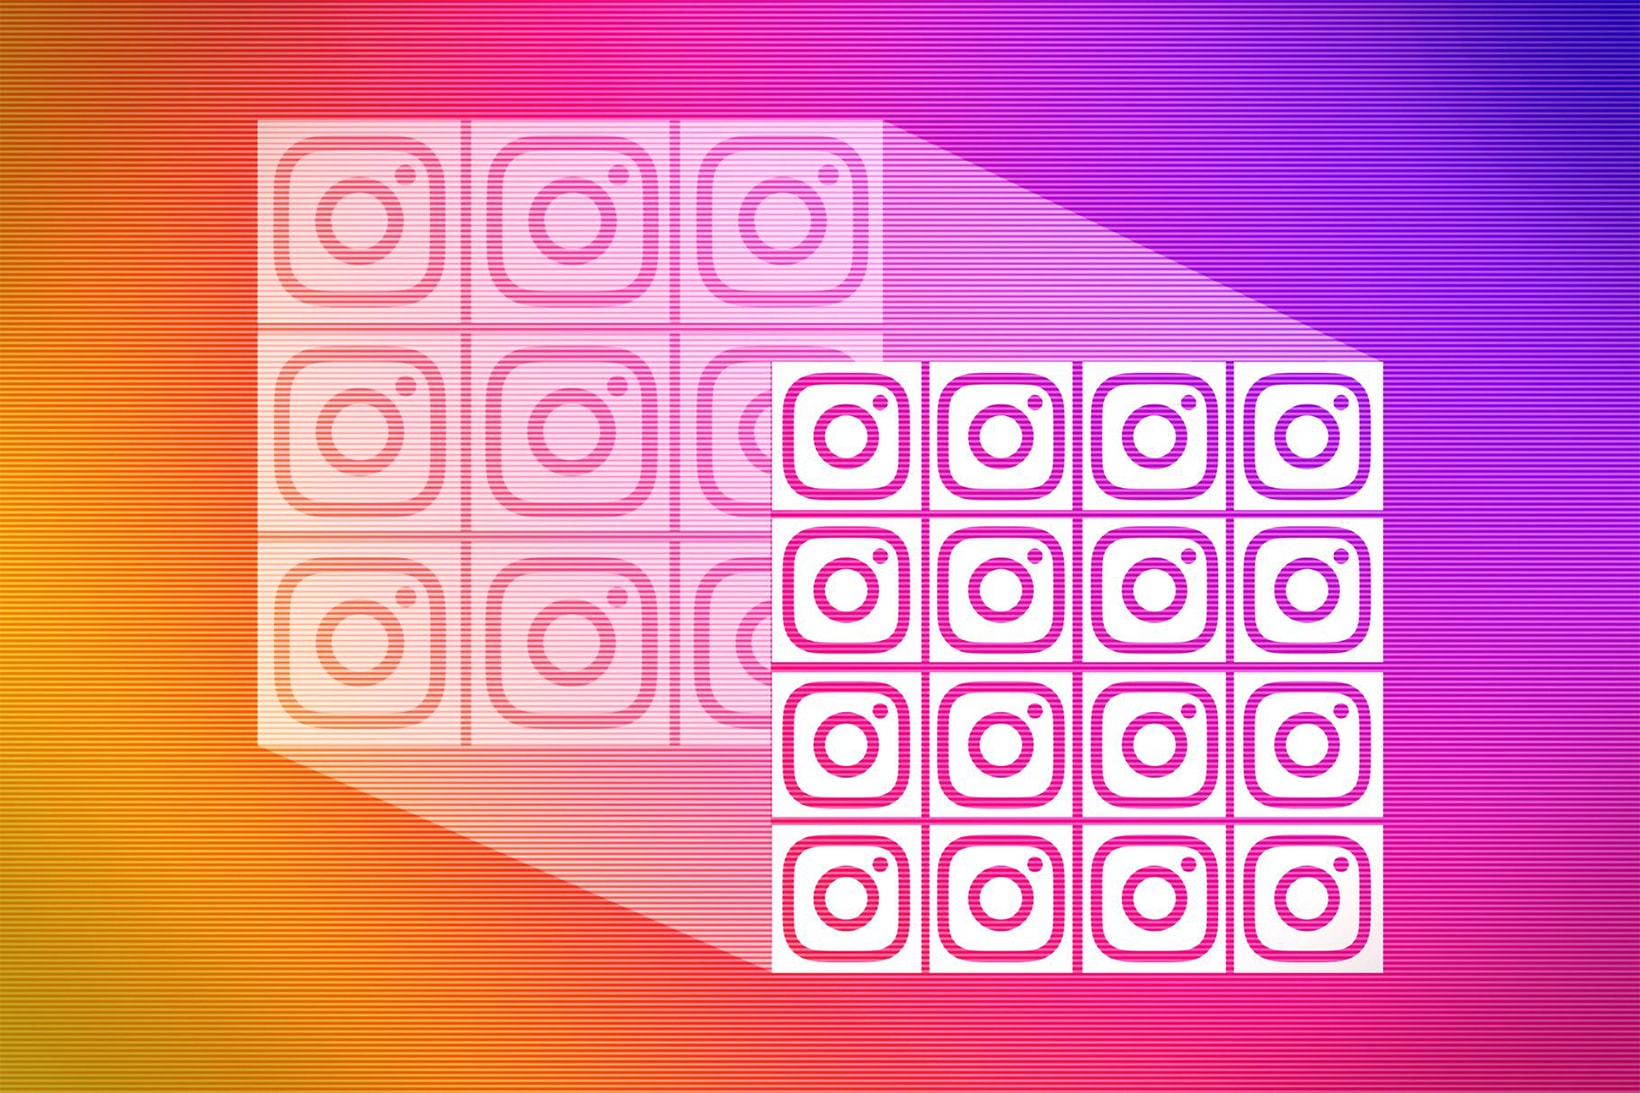 Instagram 4x4 Grid New 3x3 Change Mosaic 2017 September Fall